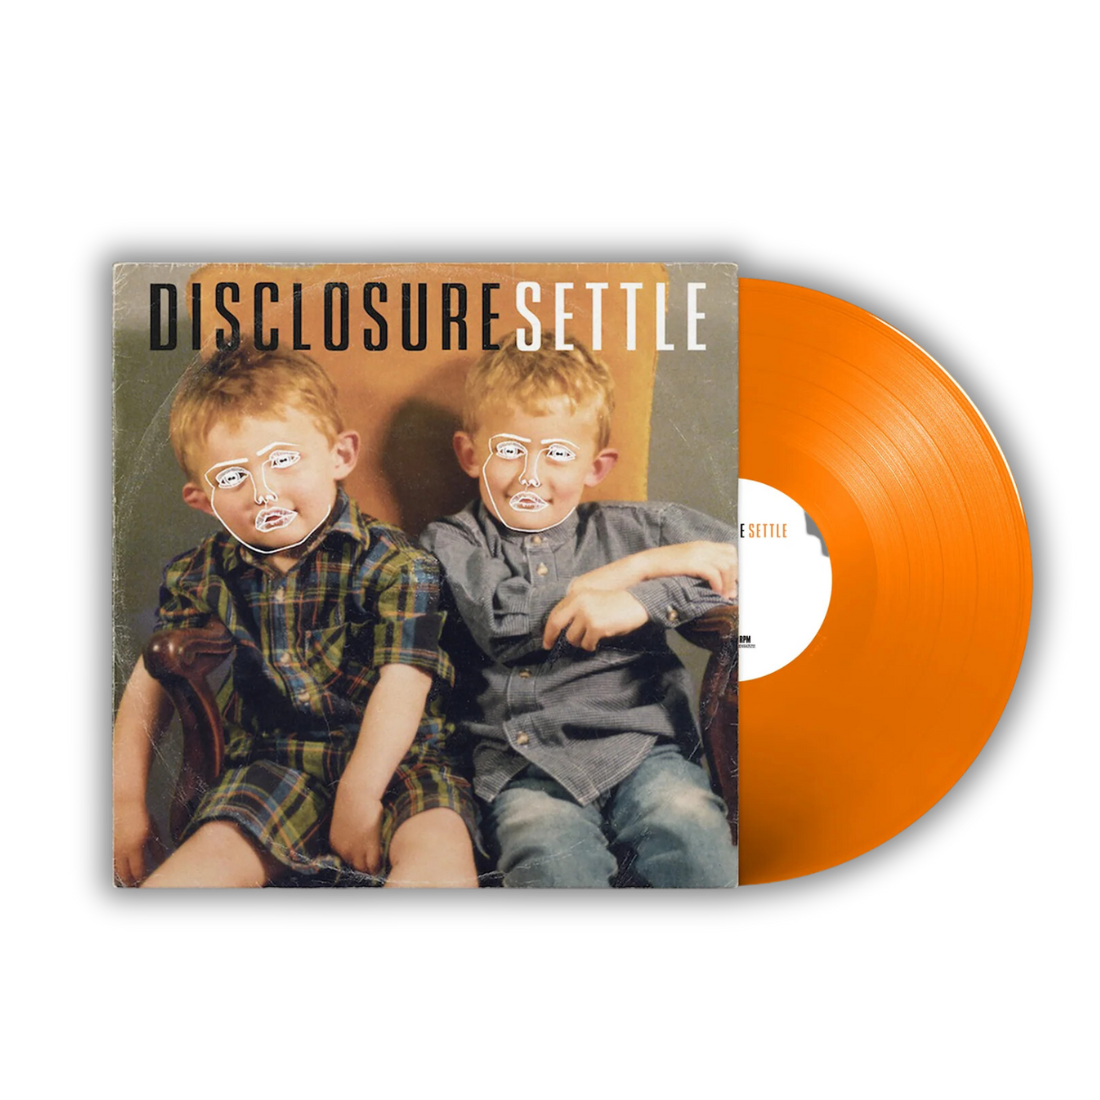 Disclosure - Settle 10: Transparent Orange Vinyl 2LP